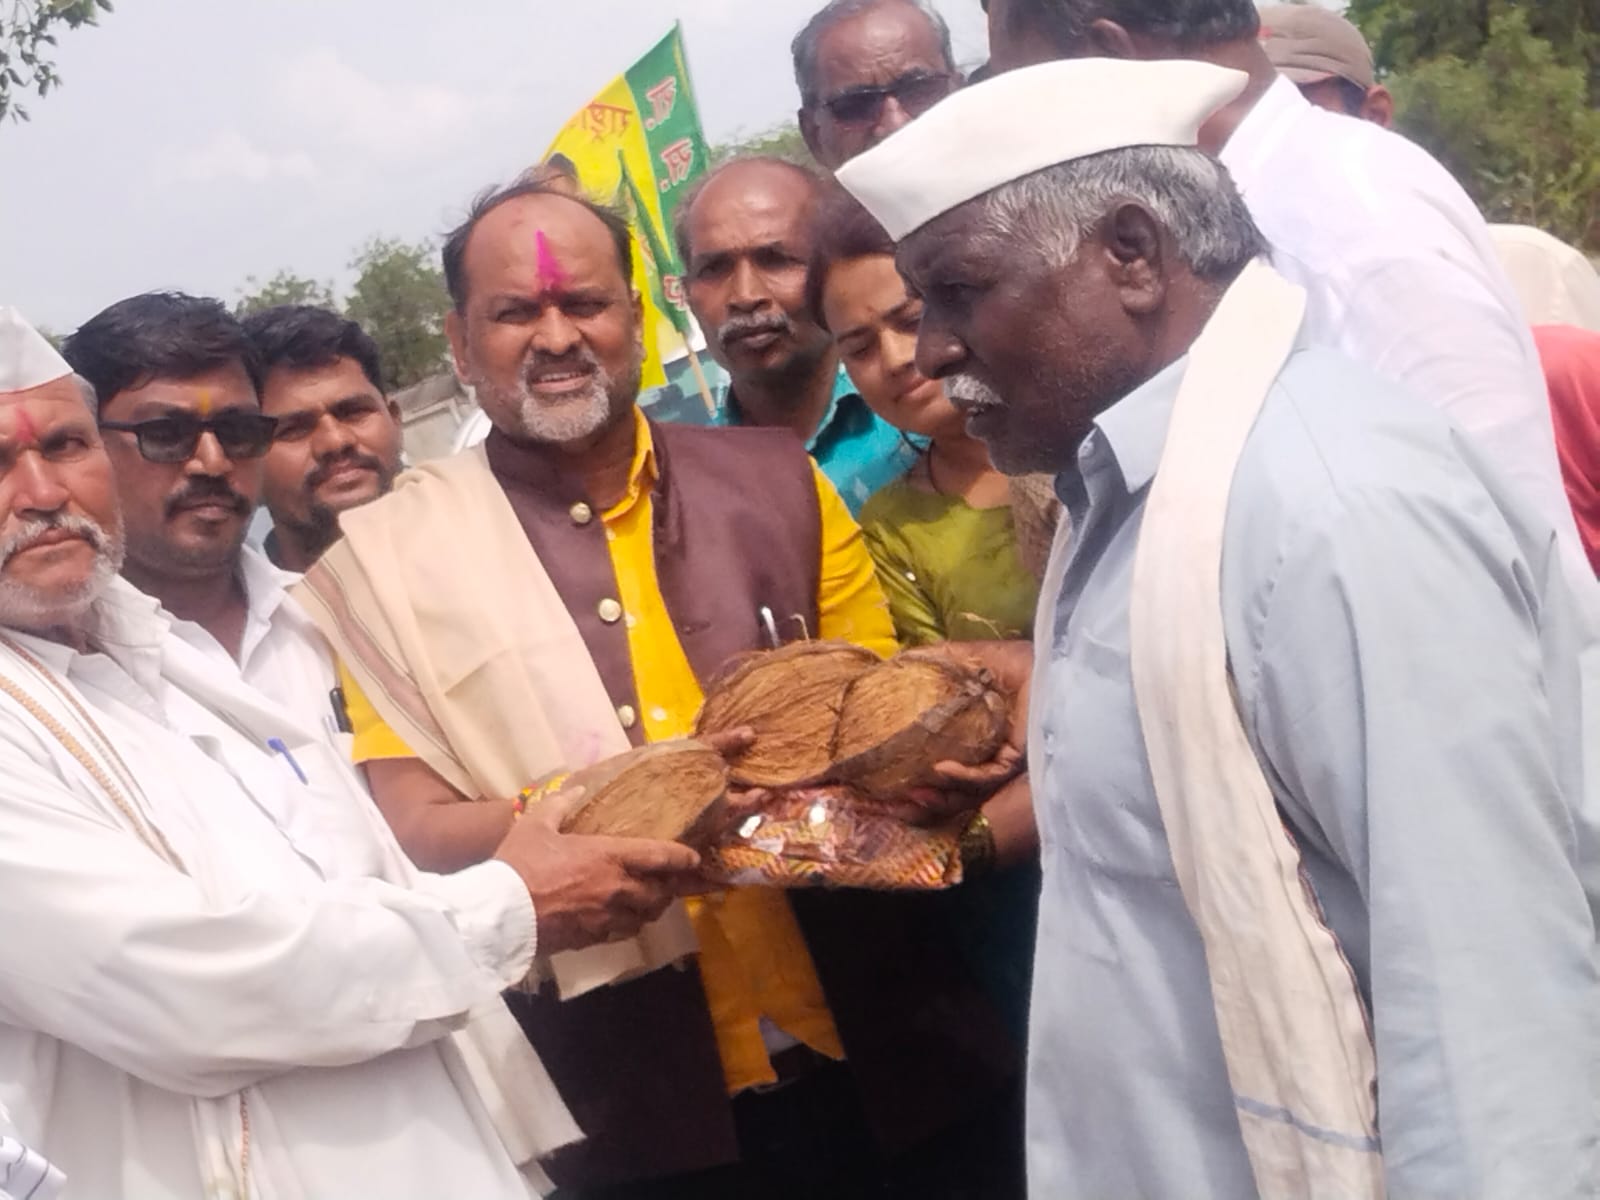 Former minister Mahadev Jankar visits villages in Karmala taluk on the occasion of Janaswaraj Yatra of RSP